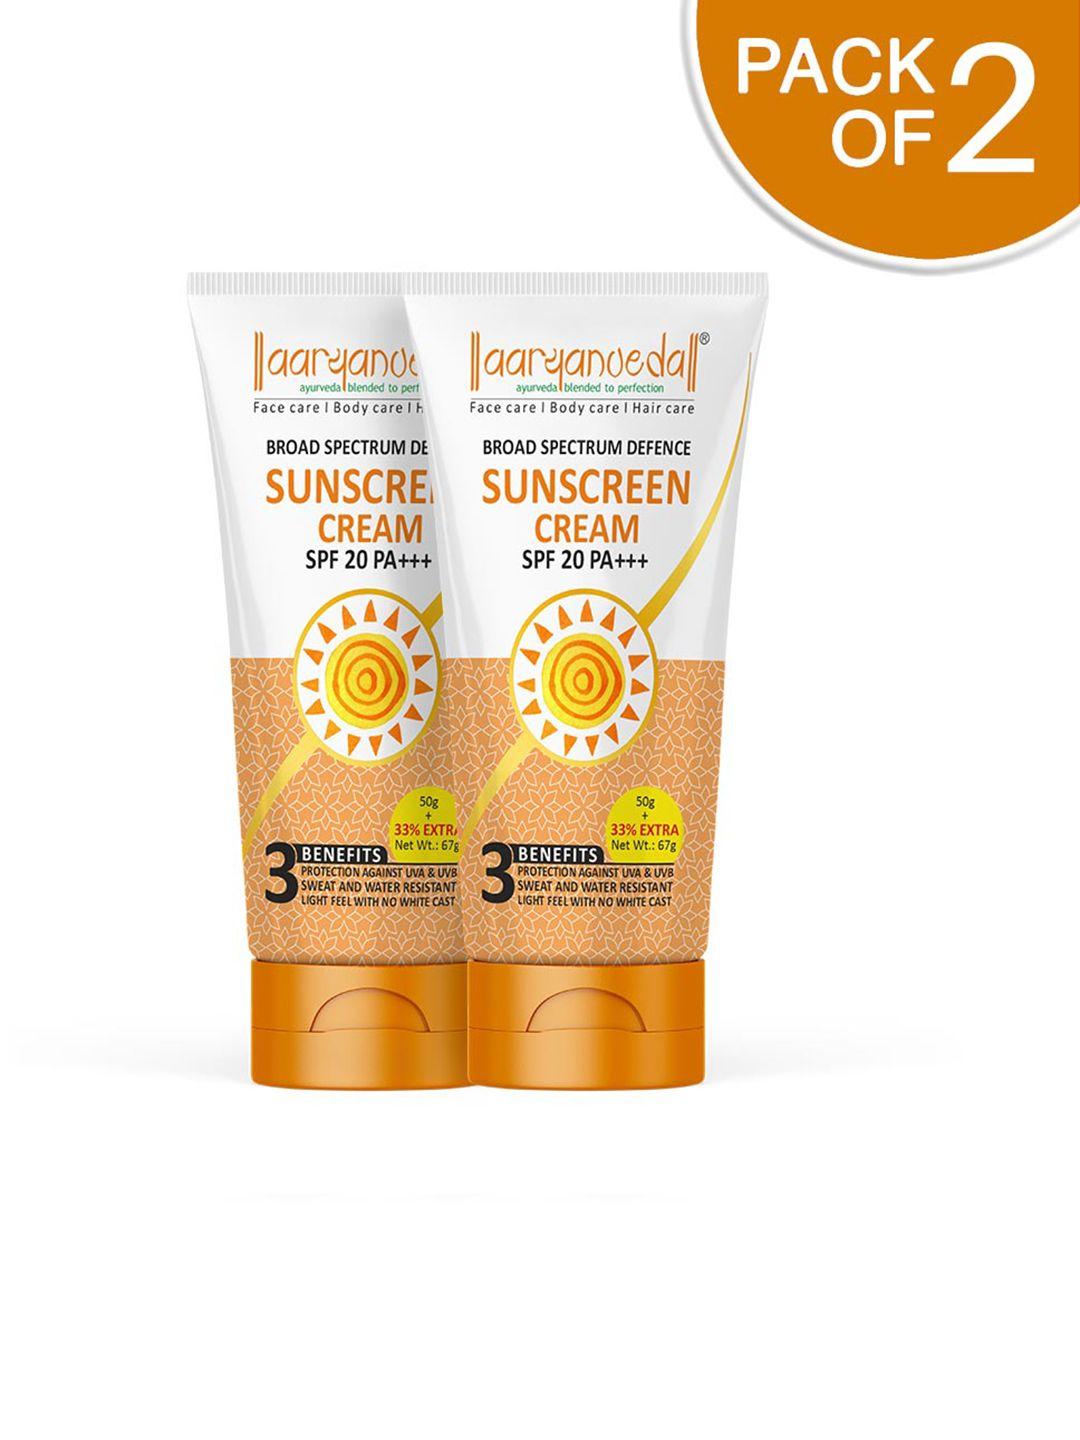 aryanveda  broad spectrum defence set of 2  3 benefites sunscreen cream 67 gm each